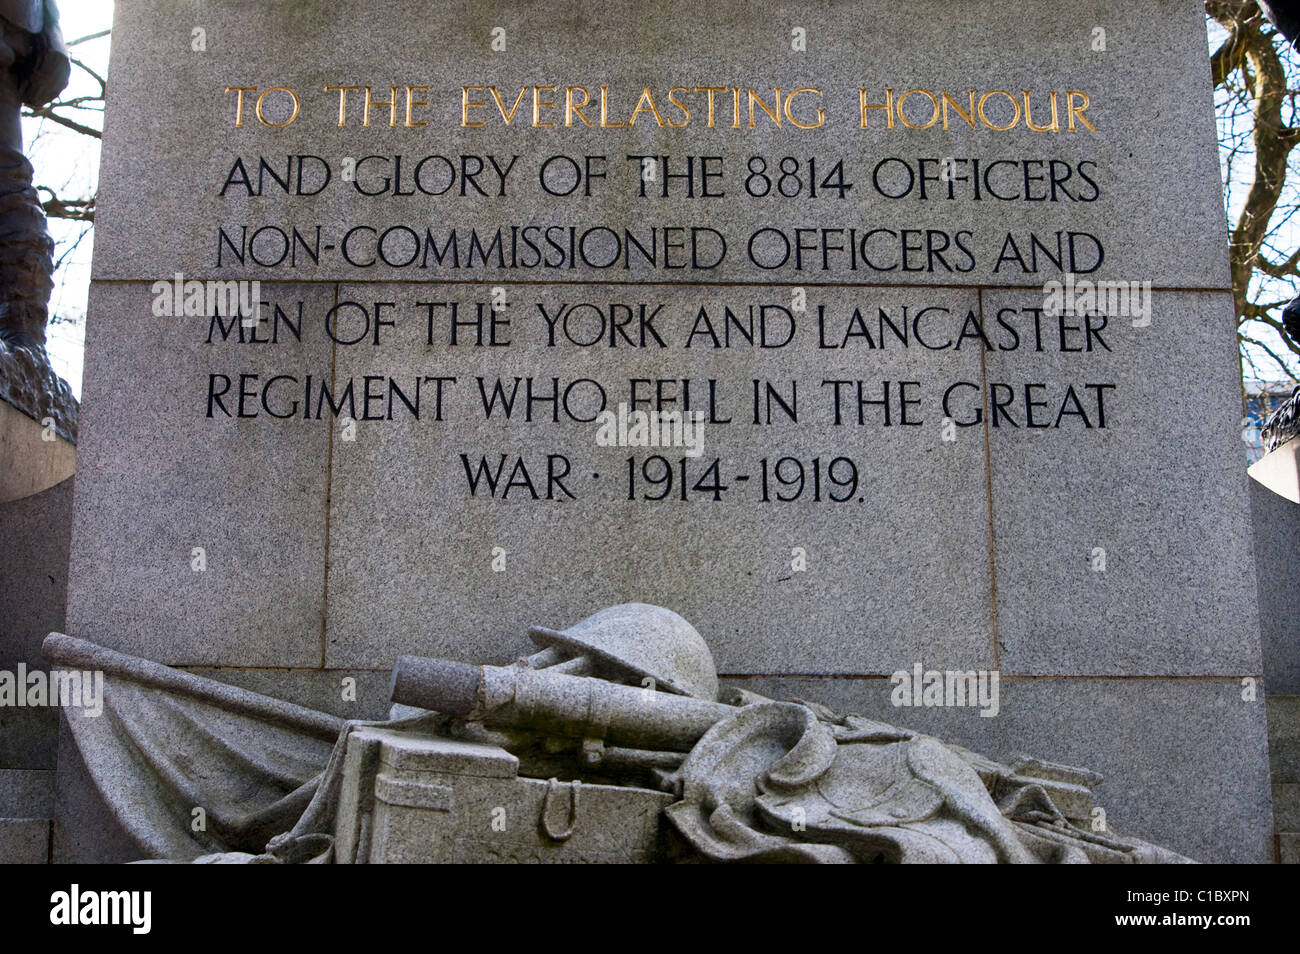 York and Lancaster Regiment First World War Memorial Banque D'Images